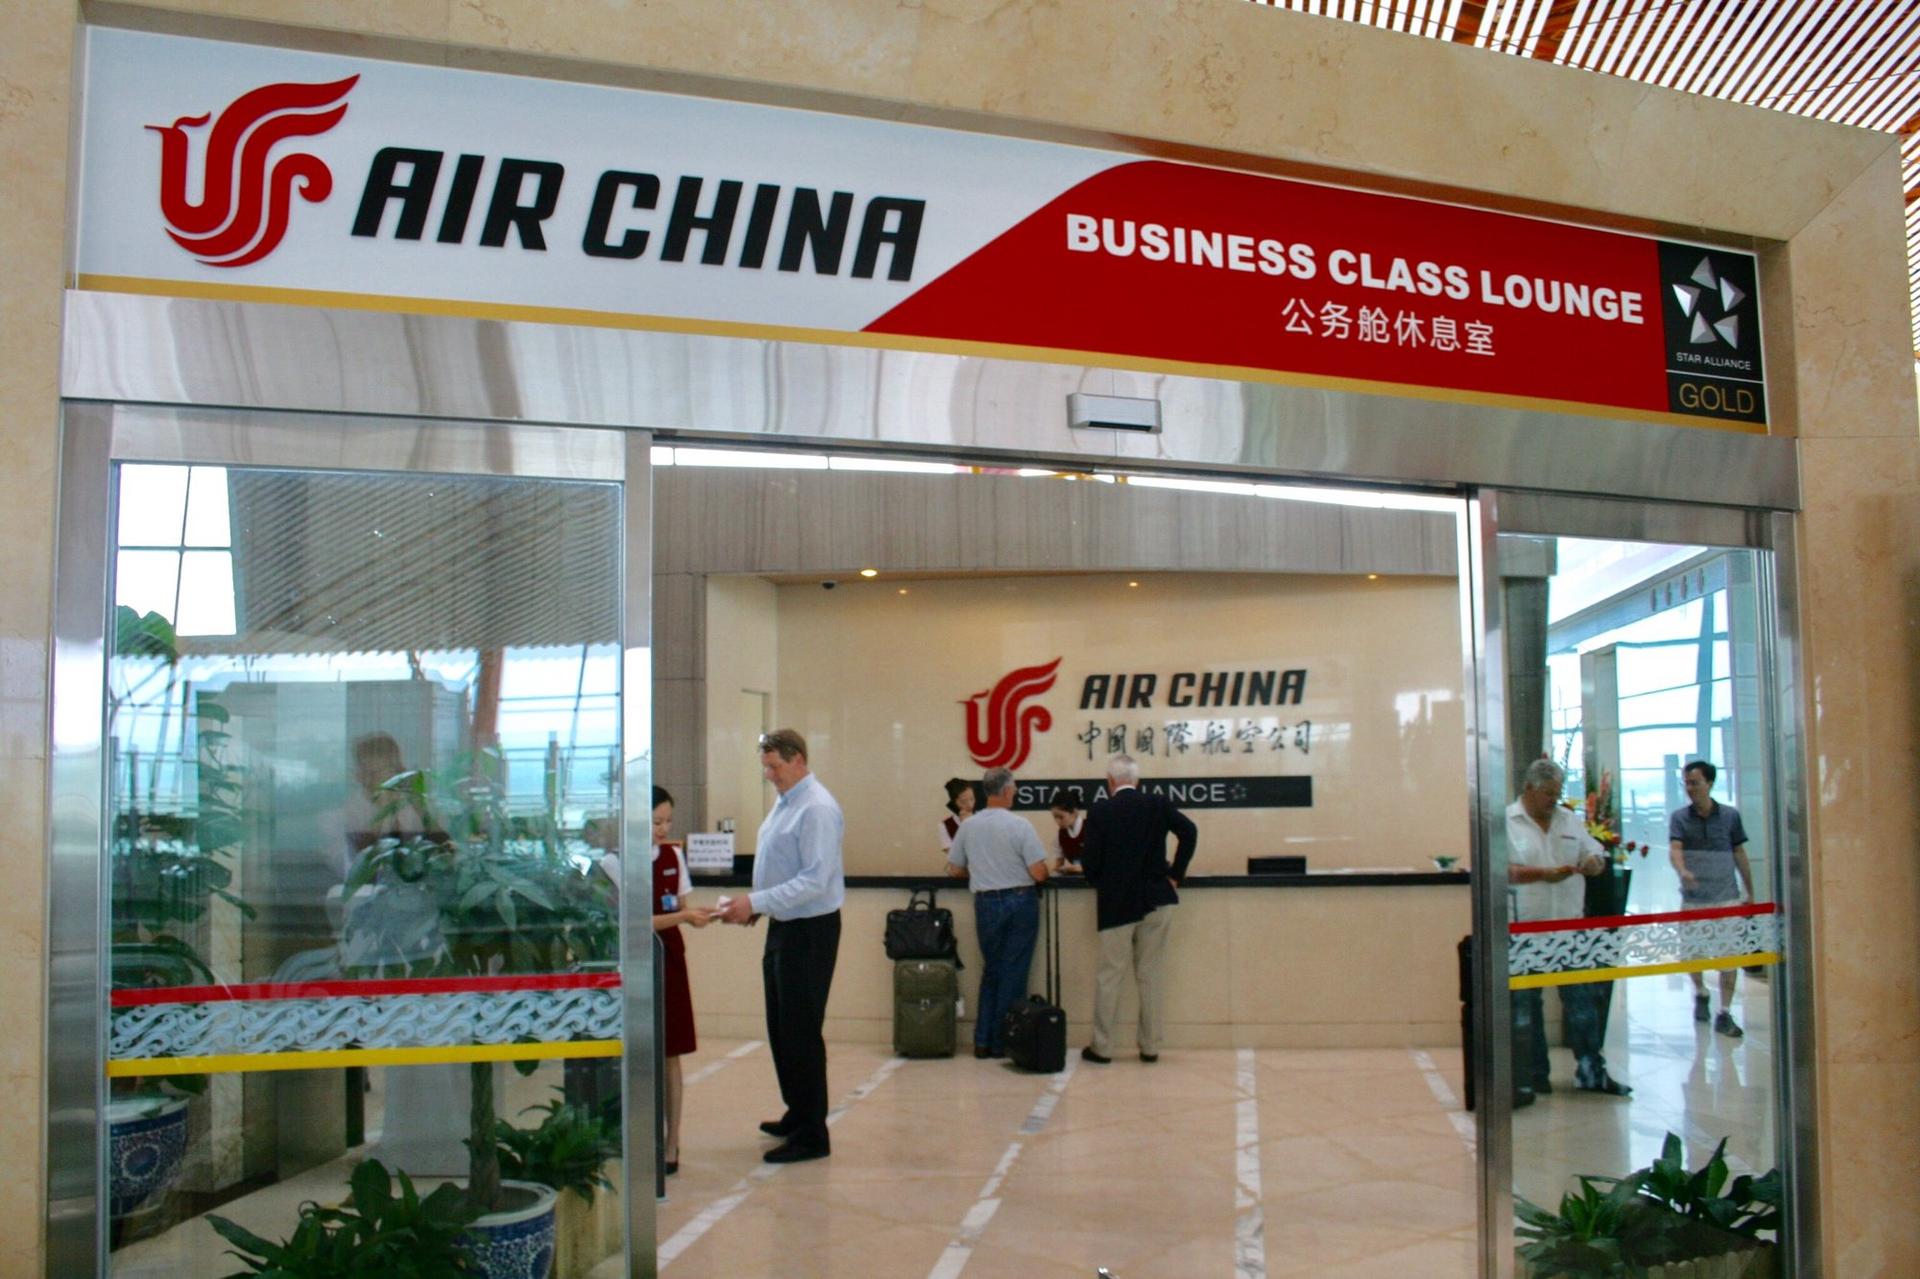 Air China International Business Class Lounge image 7 of 12